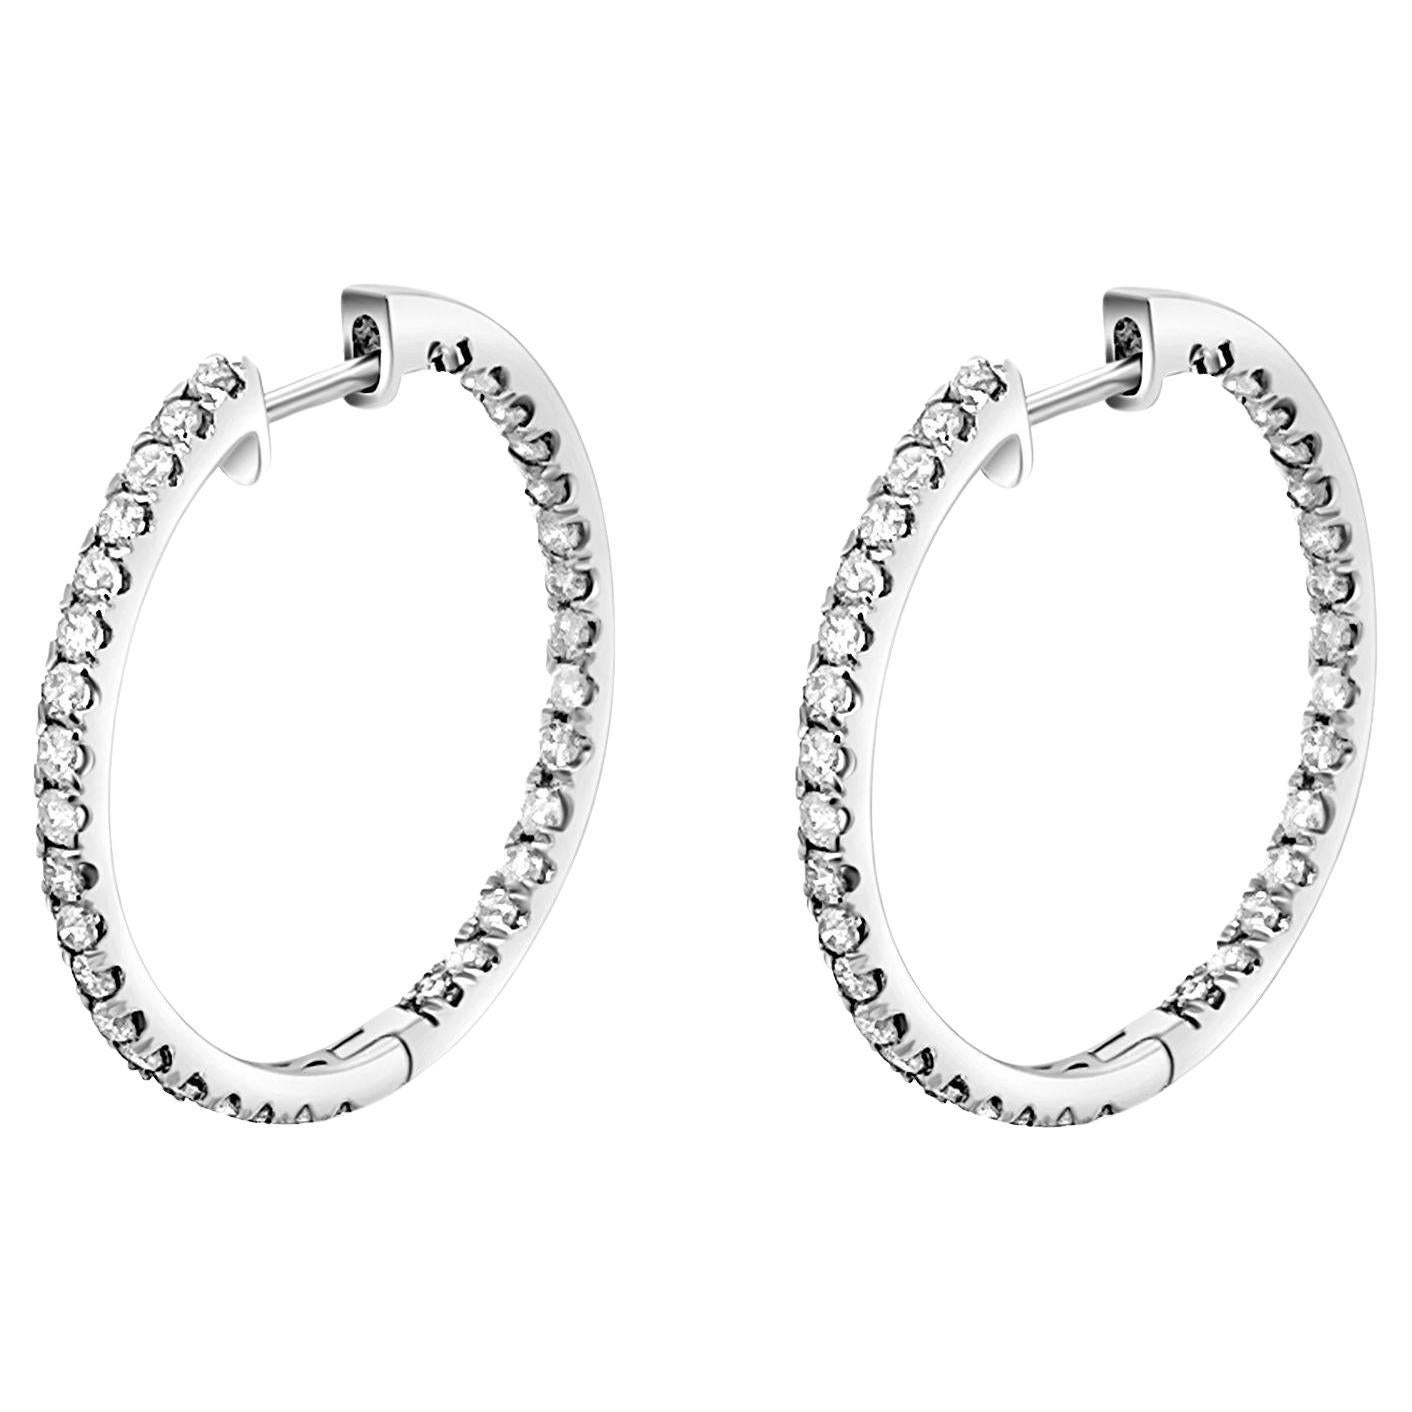 Natual 1.2 Carat Diamond Inside-Out Hoop Earrings in 14K Gold For Sale